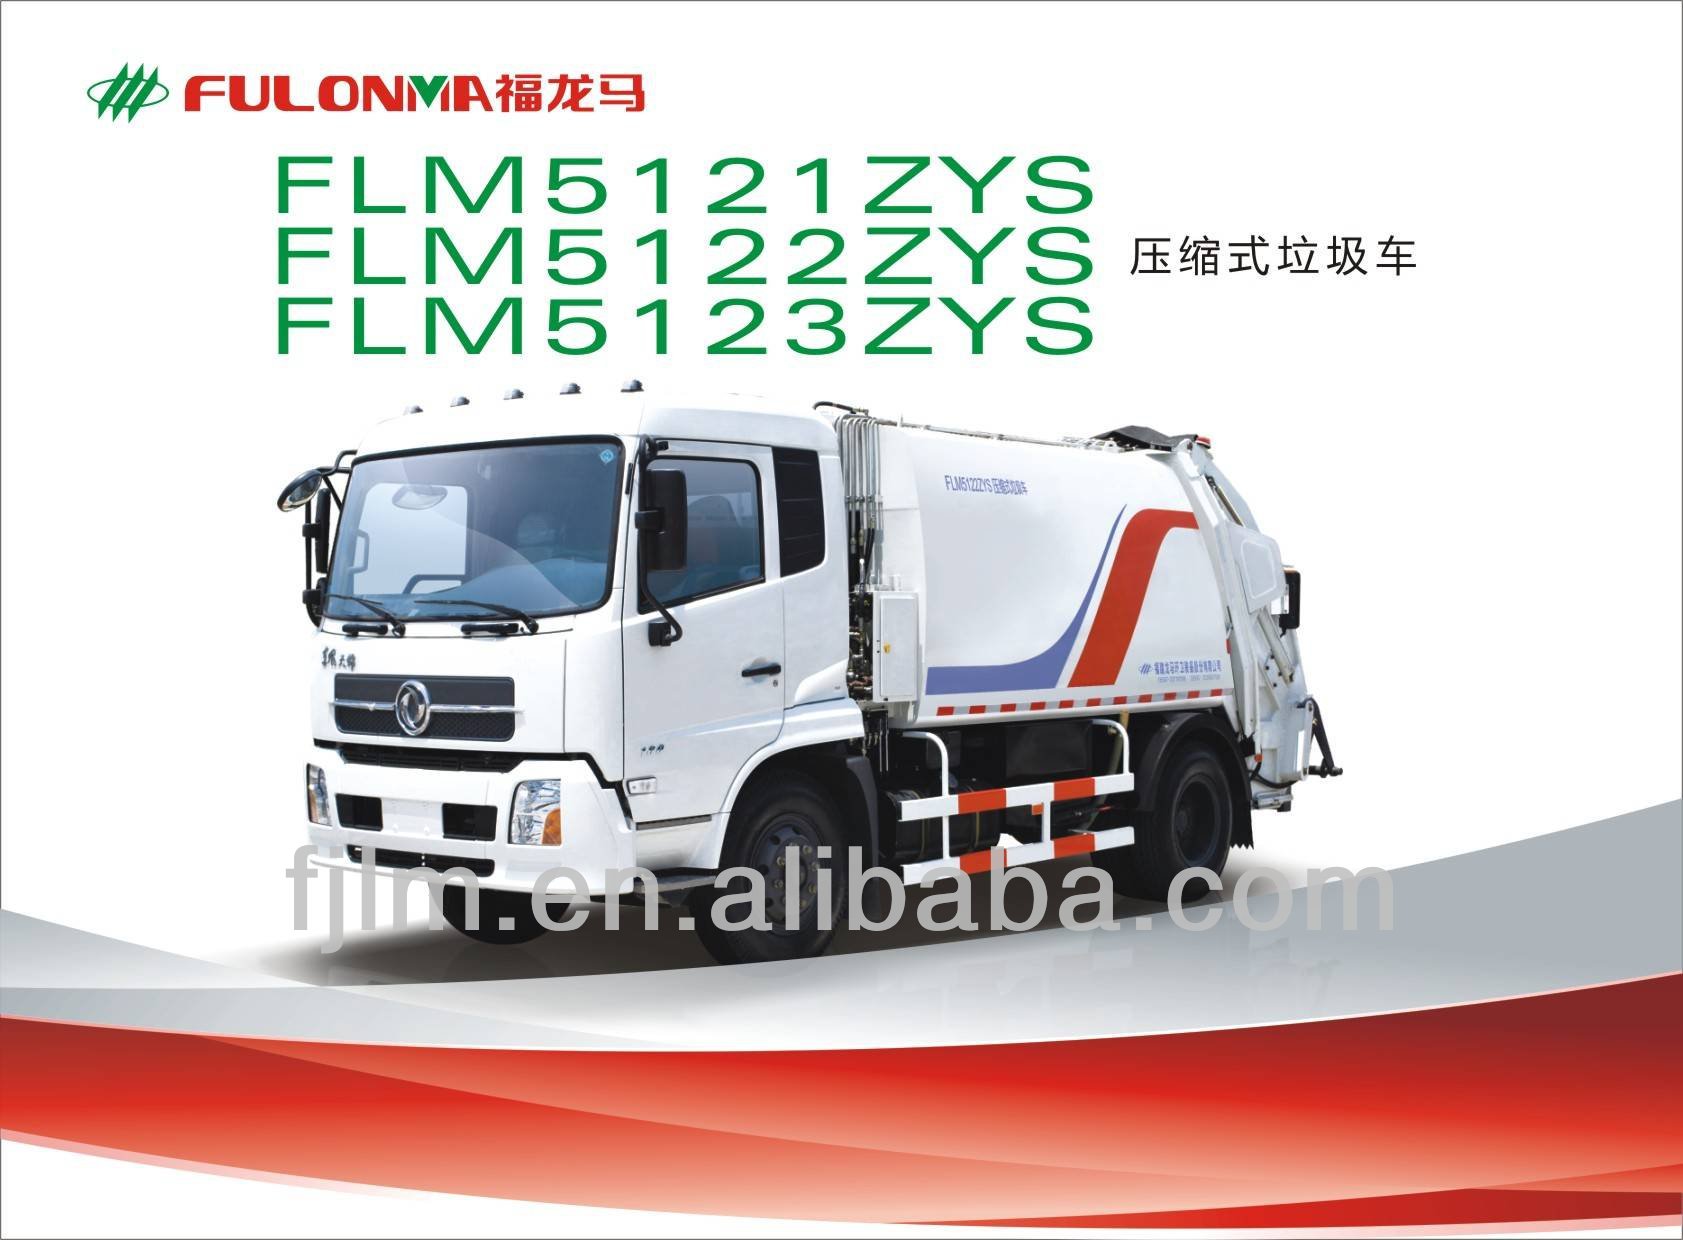 FLM 5121ZYS refuse truck